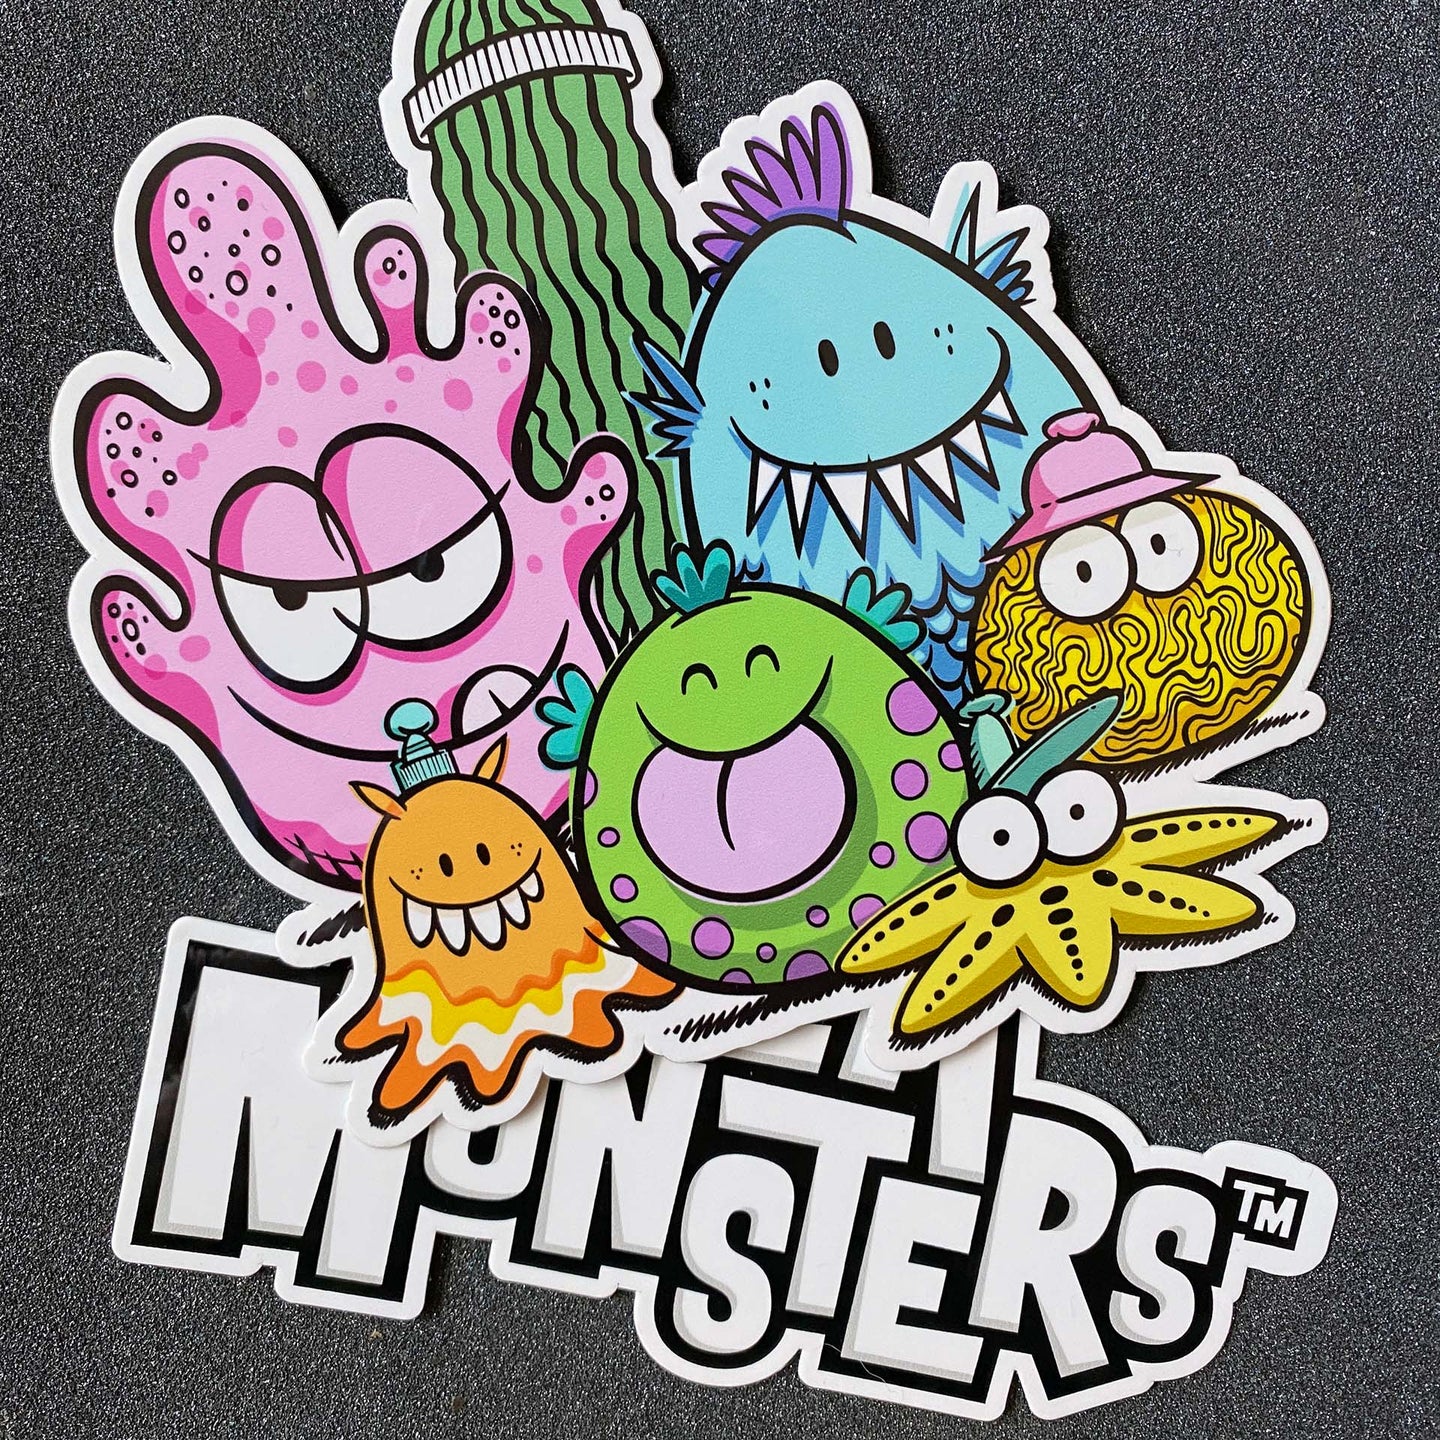 Sea Monster Large 2 Sticker Pack